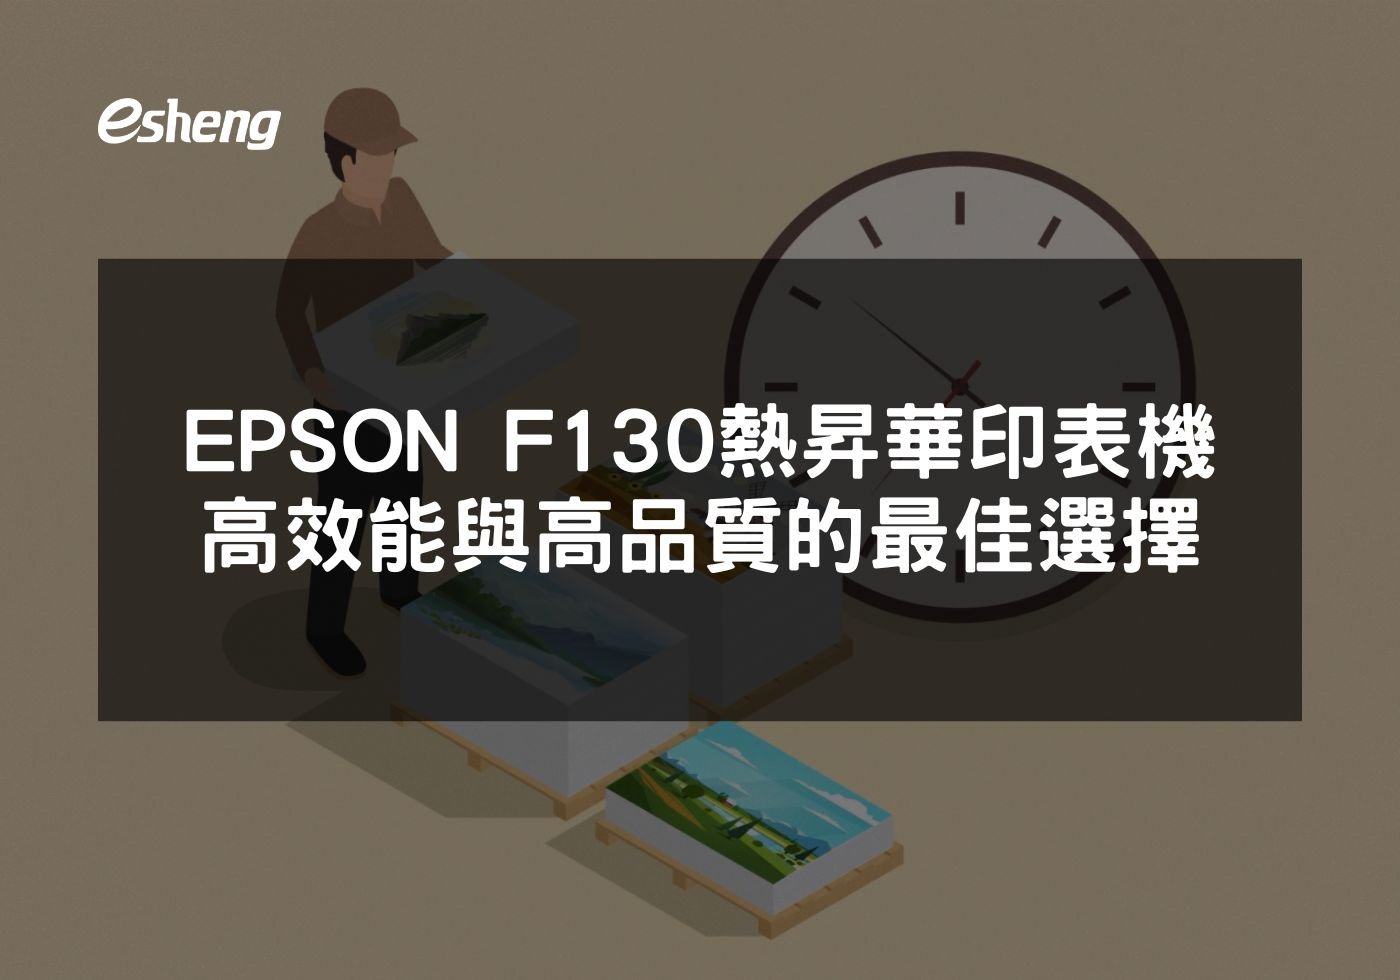 EPSON F130熱昇華印表機高效能與高品質的最佳選擇